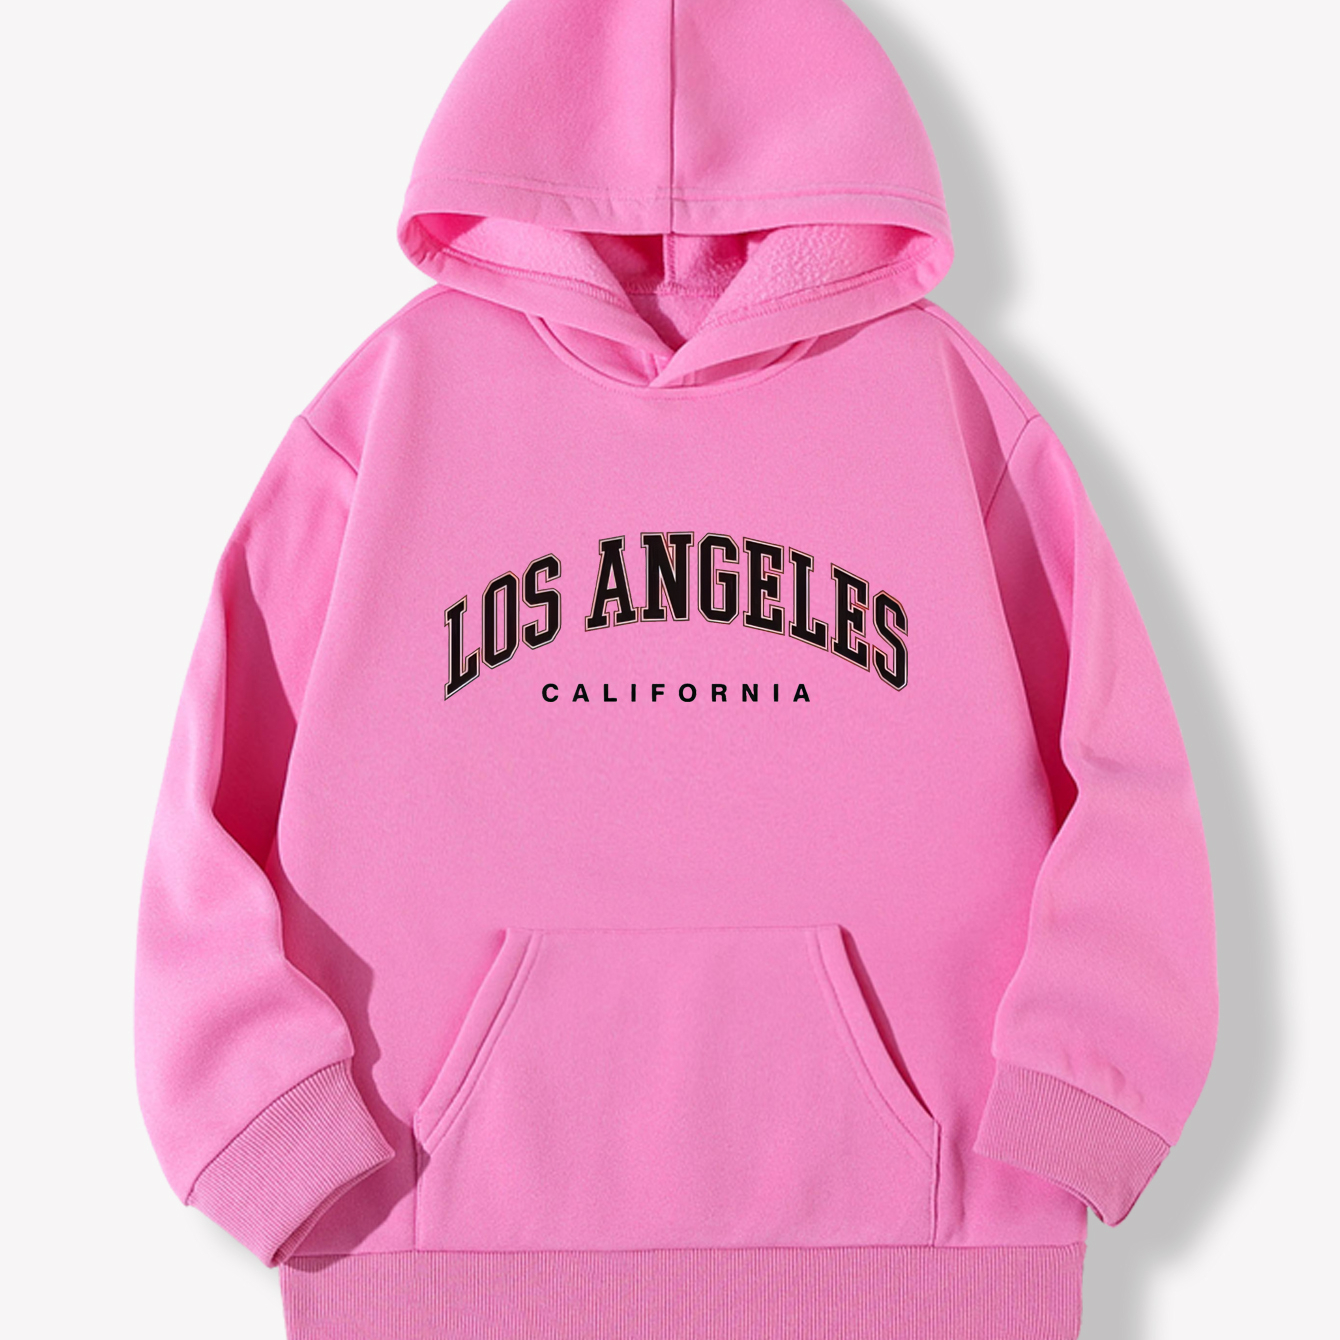 

Los Angeles Letter Print Boys Casual Pullover Long Sleeve Hoodies, Boys Sweatshirt For Spring Fall, Kids Hoodie Tops Outdoor